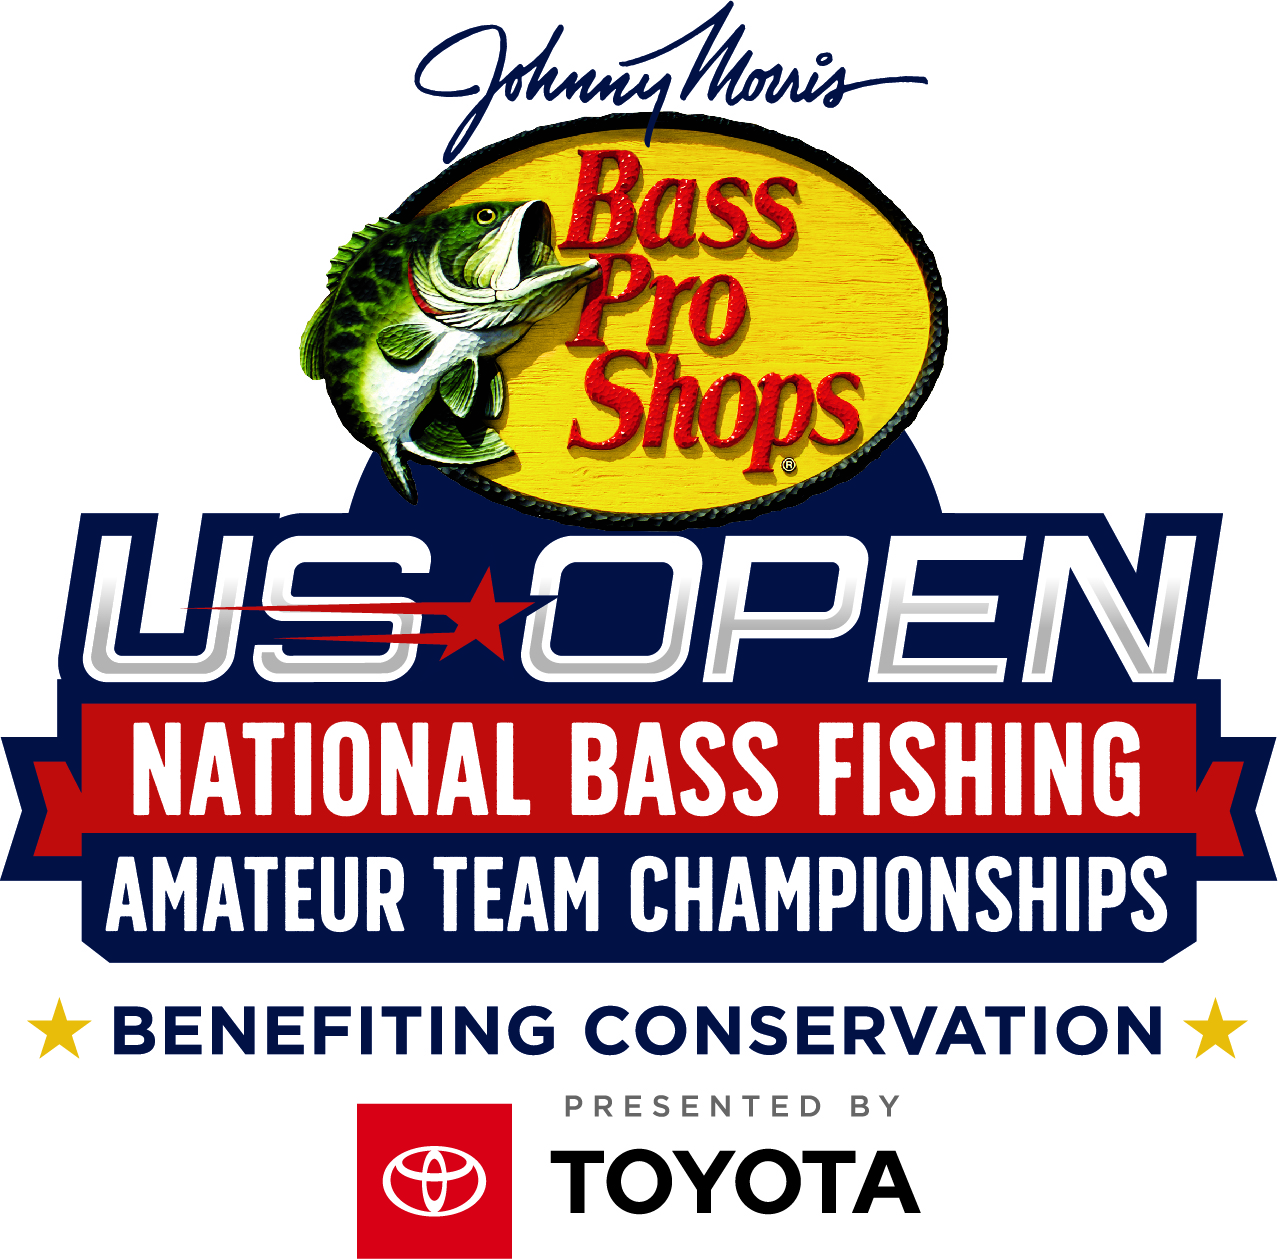 Bass Pro Shops/National Fish Habitat Partnership U.S. Open Grant